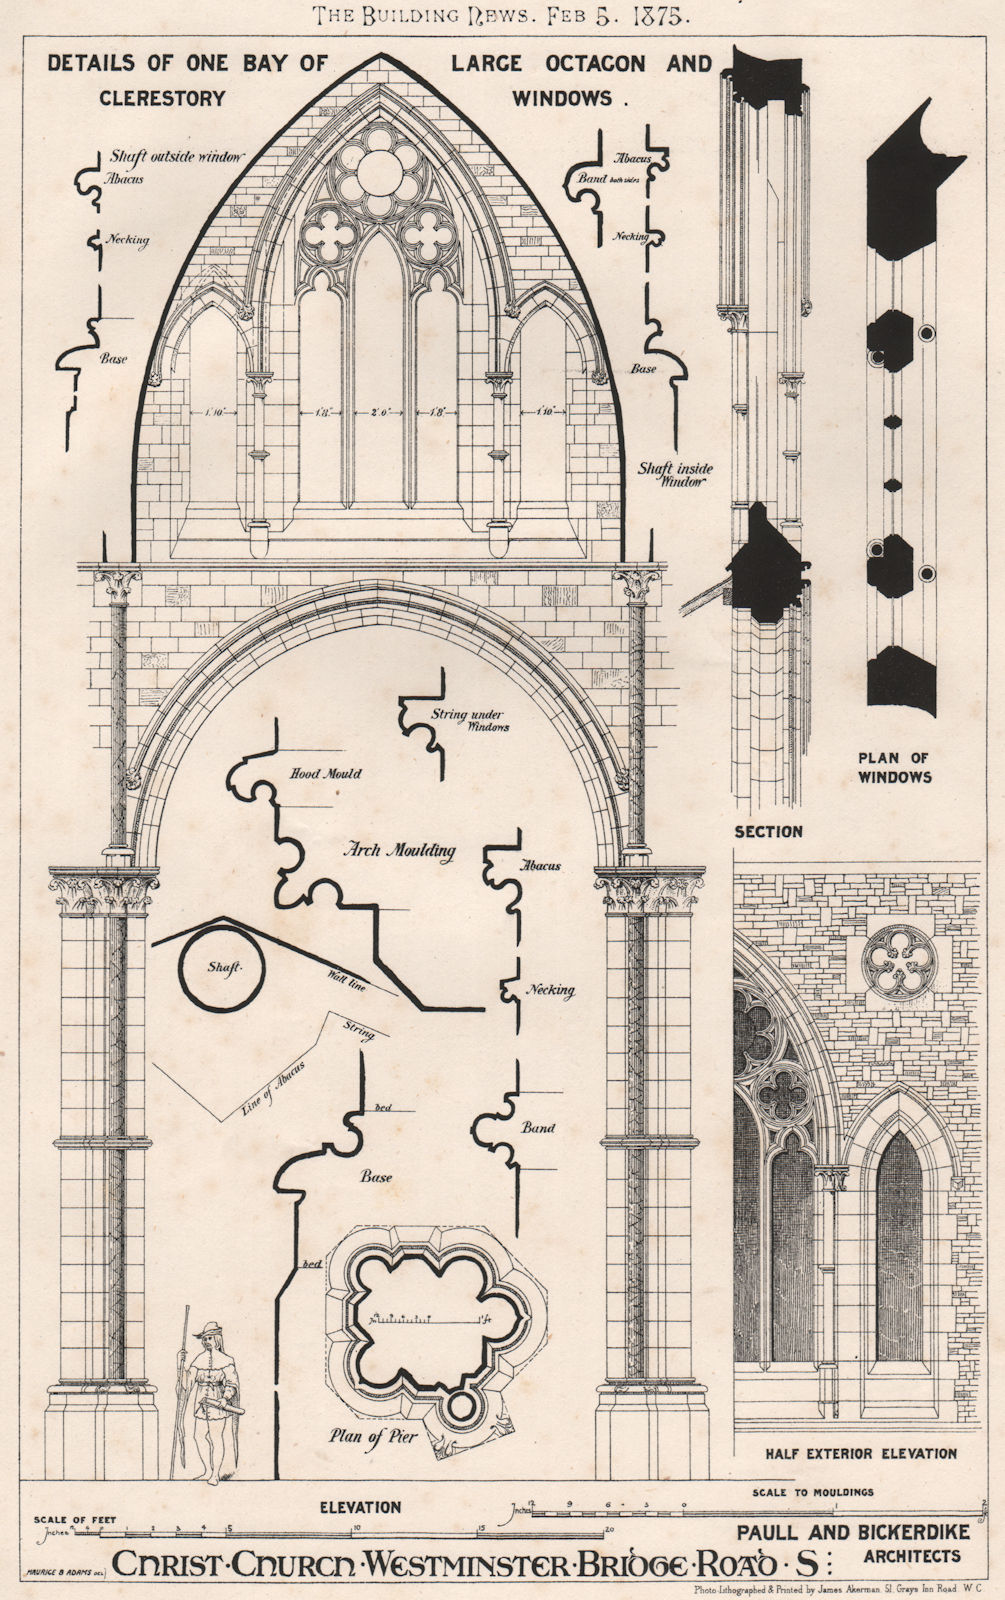 Associate Product Christ Church, Westminster Bridge Rd.; Paull & Bickerdike, Architects 1875